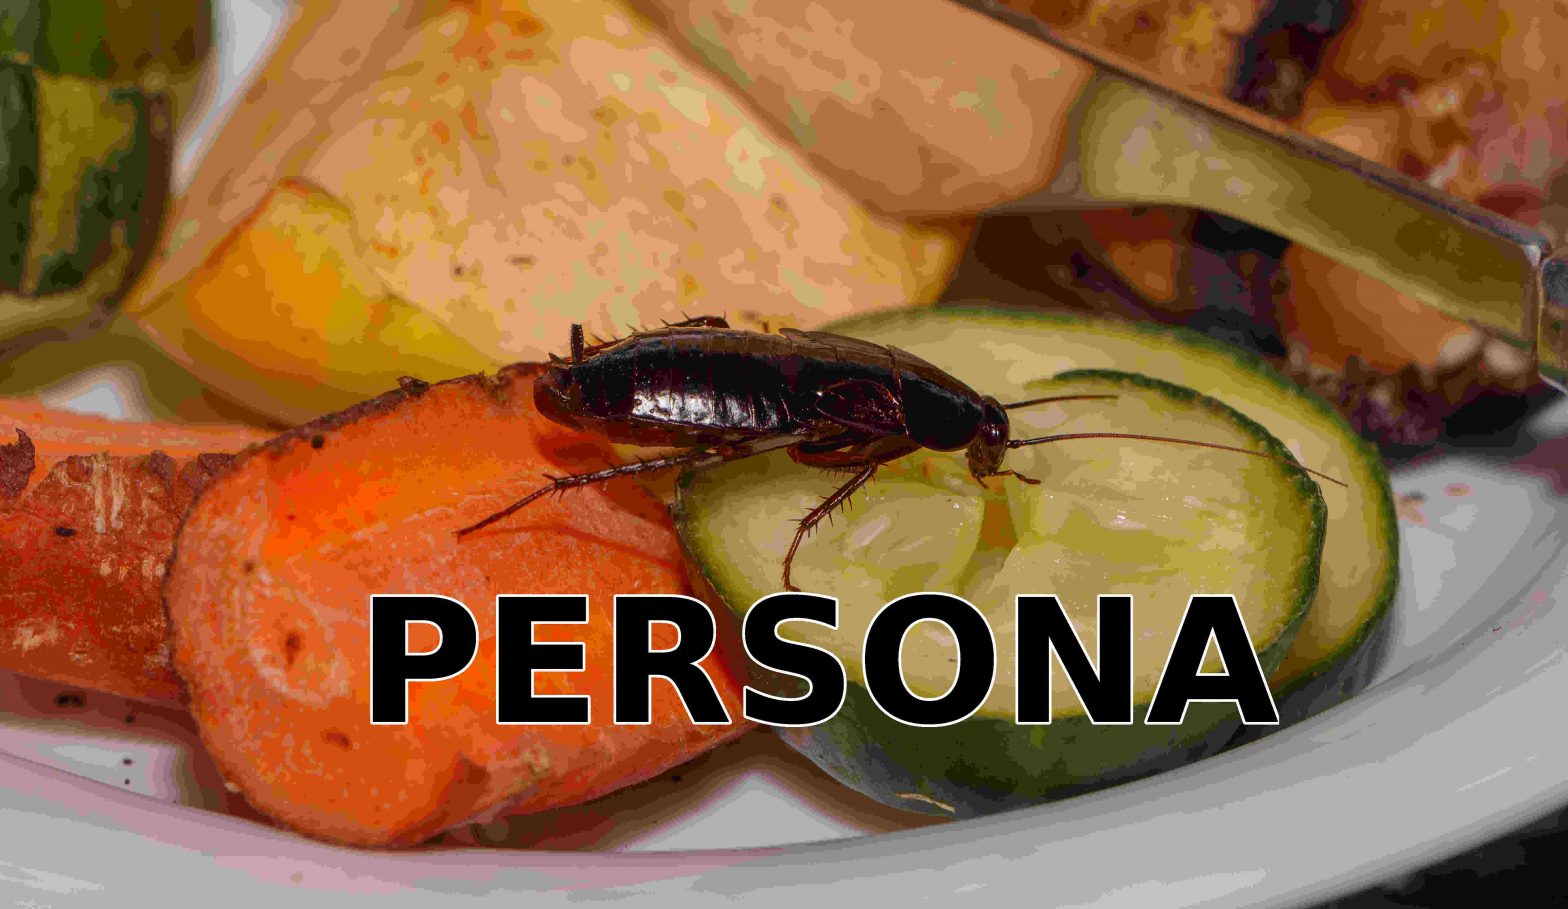 Una cucaracha es una persona